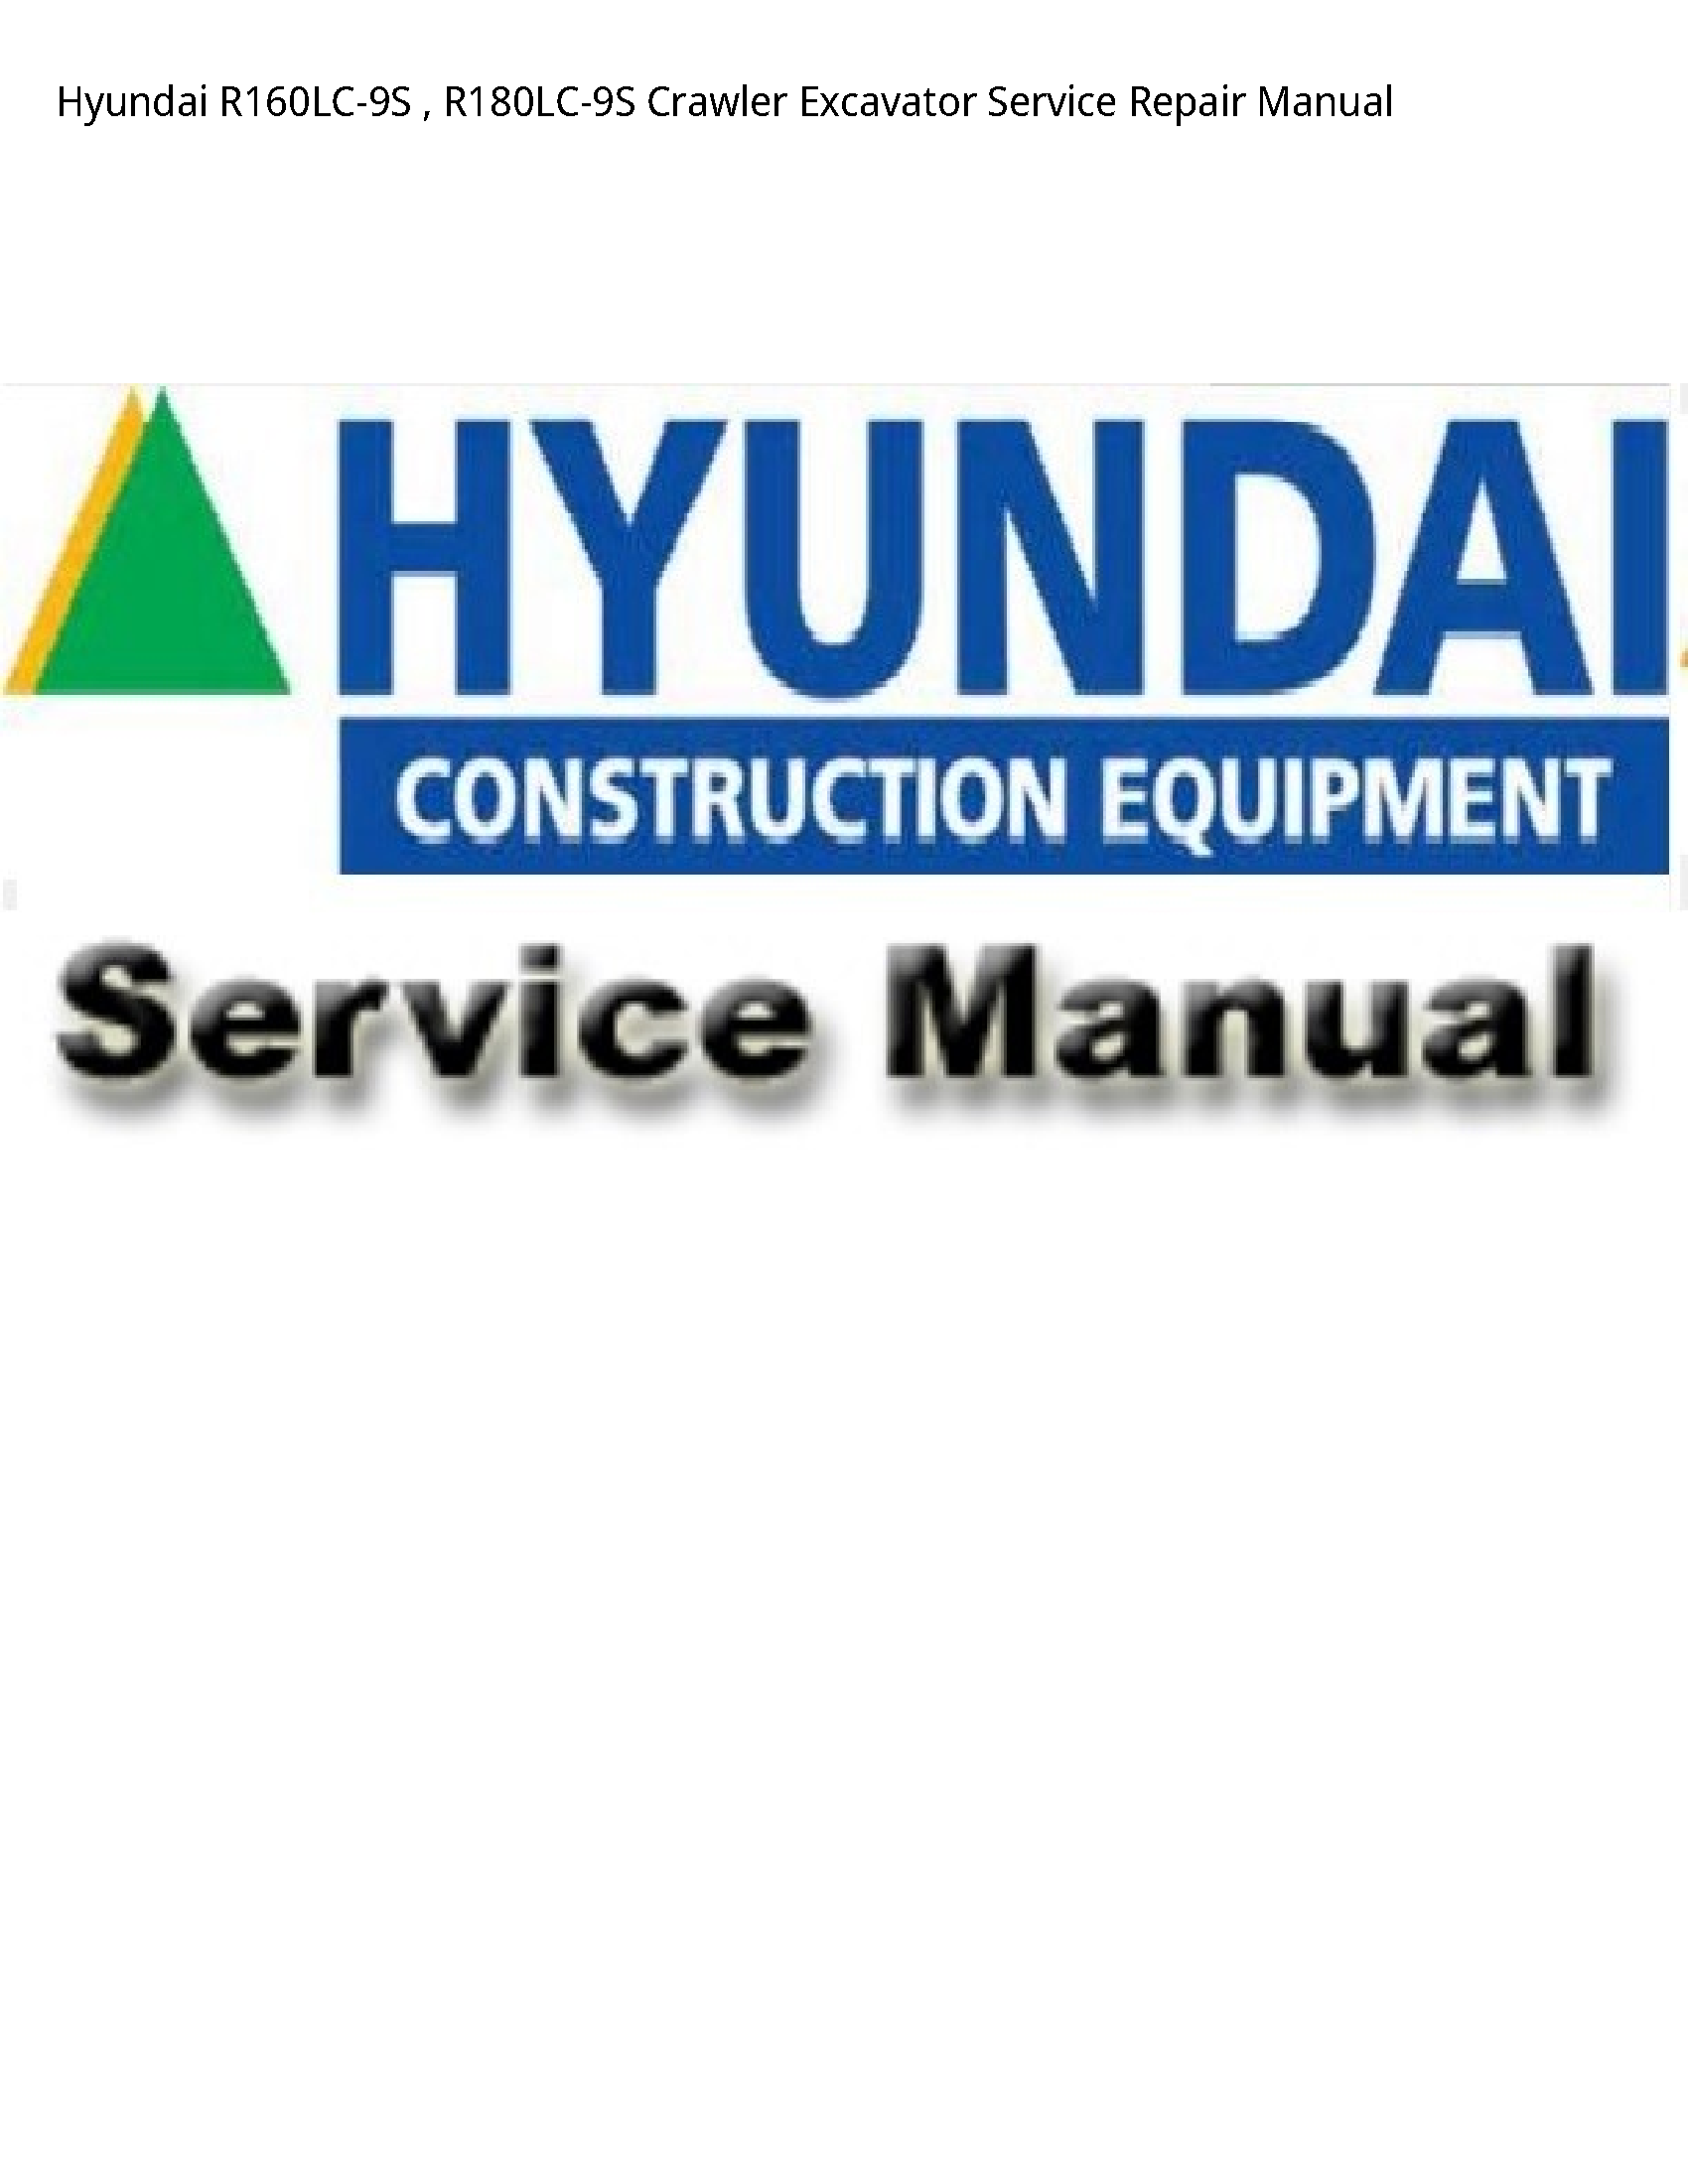 Hyundai R160LC-9S Crawler Excavator manual